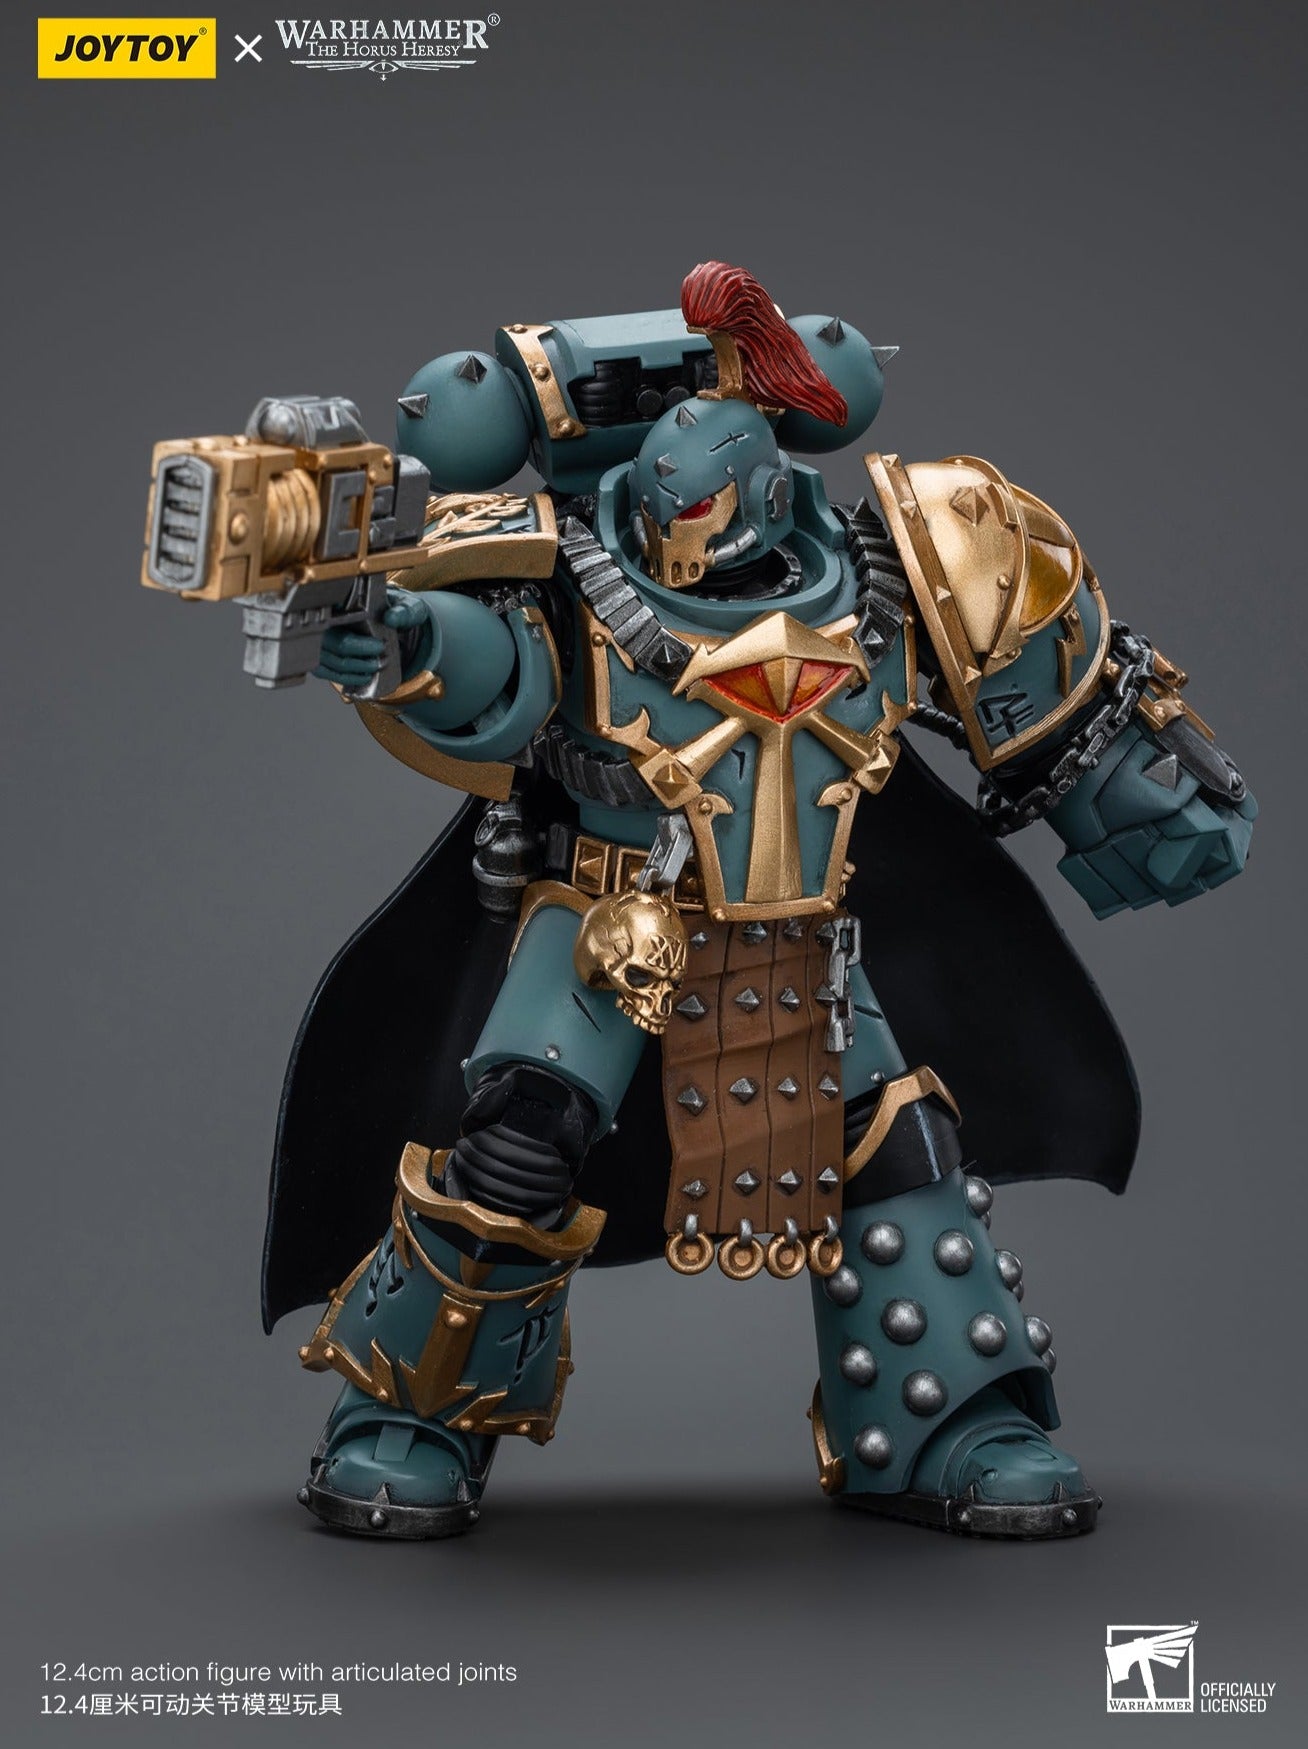 Warhammer The Horus Heresy: Sons Of Horus: Legion Praetor With Power Fist: Joy Toy